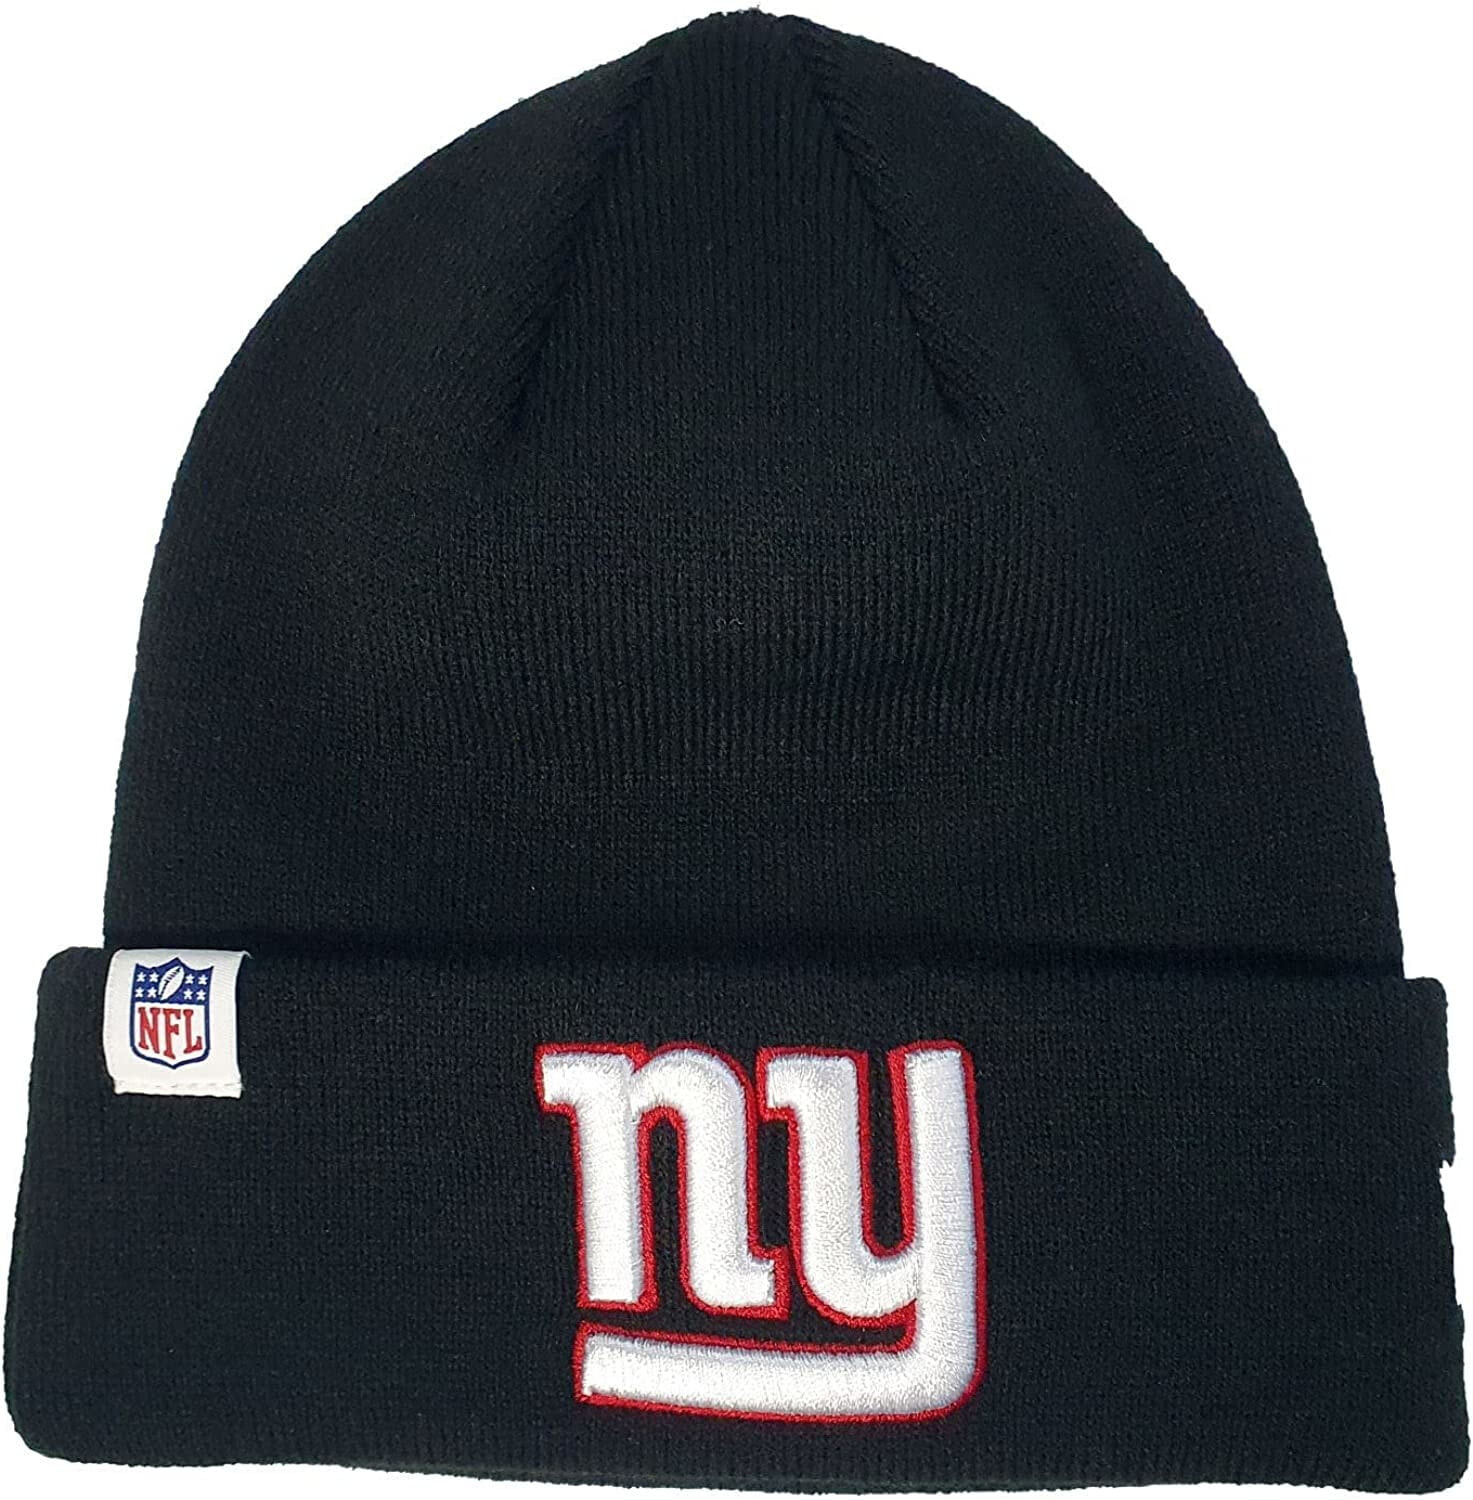 Мужская шапка черная трикотажная New Era NFL Beanie American Football Hat Winter Patriots Seahawks Raiders Chiefs 49ers Black